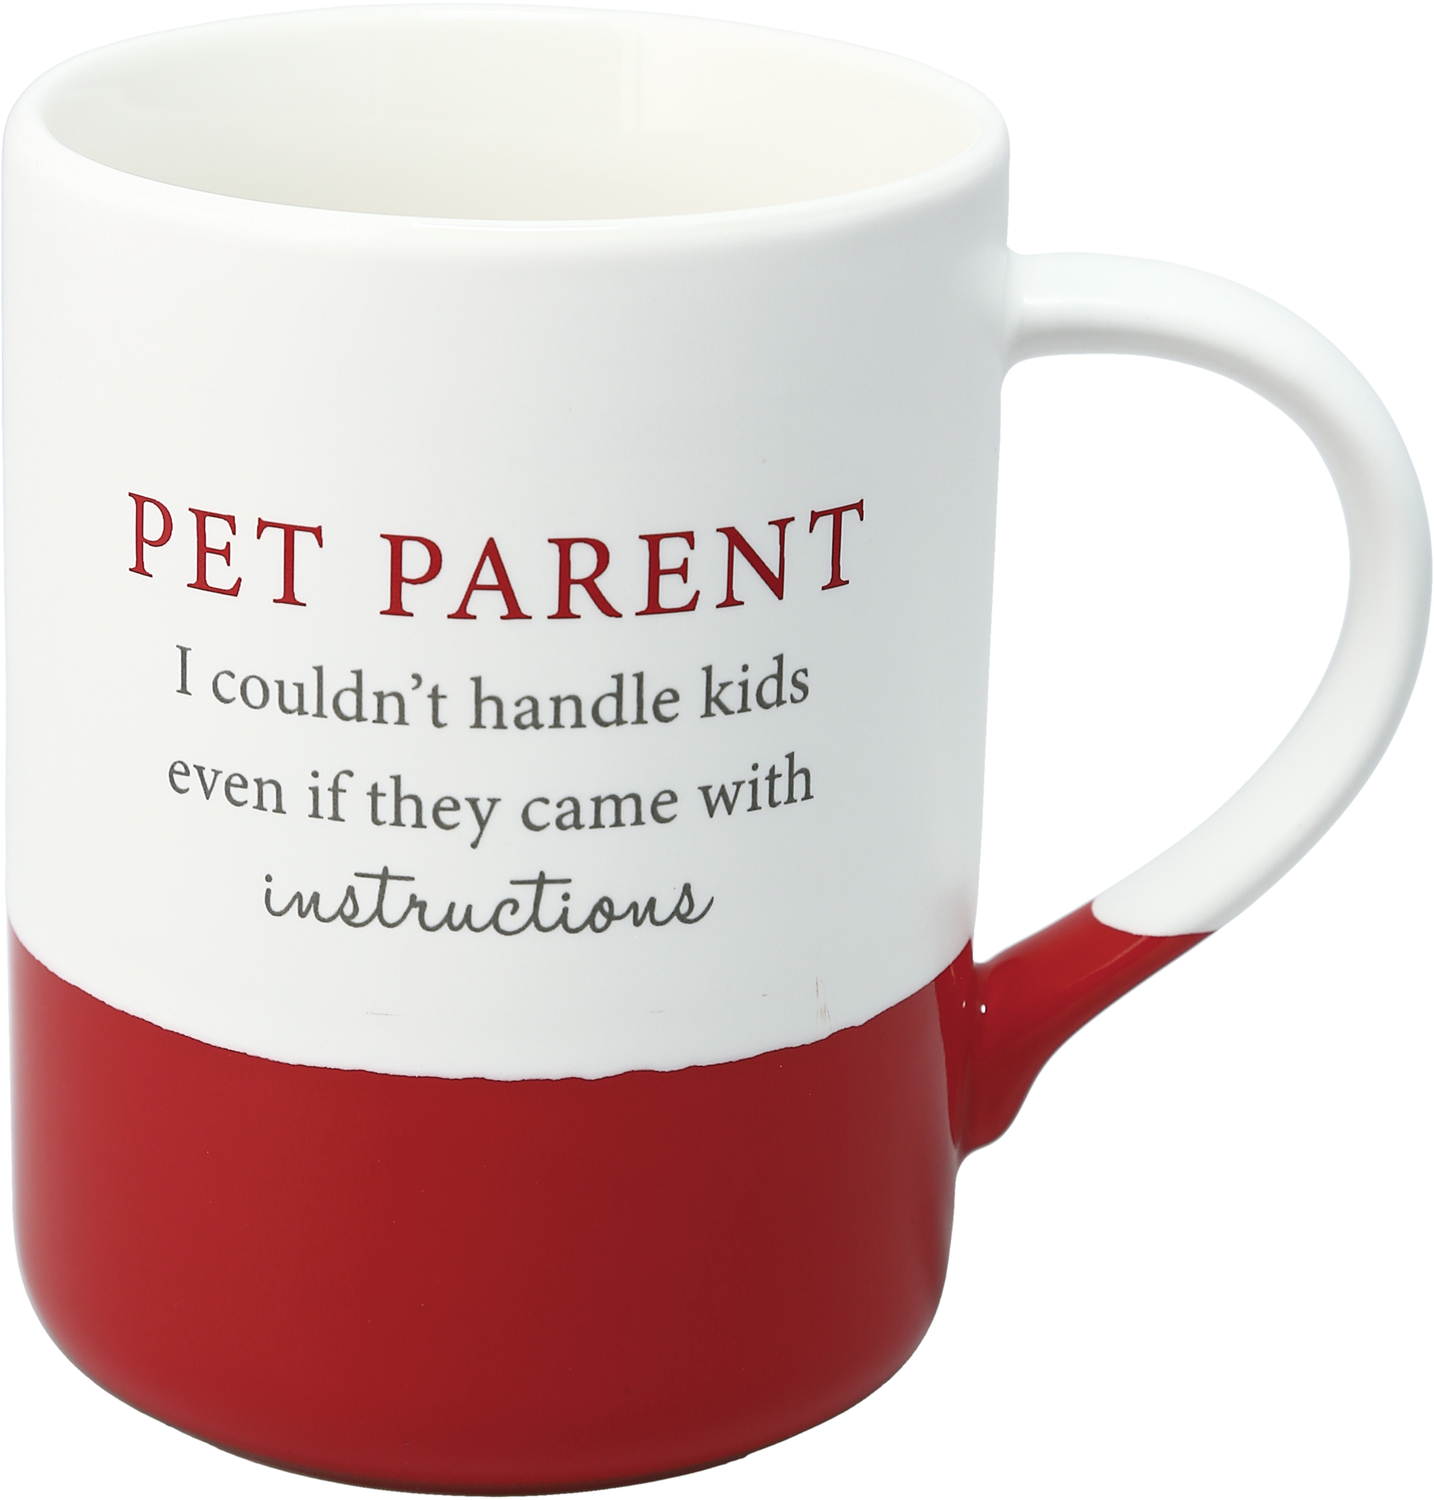 Pet Parent by A-Parent-ly - Pet Parent - 18 oz Mug